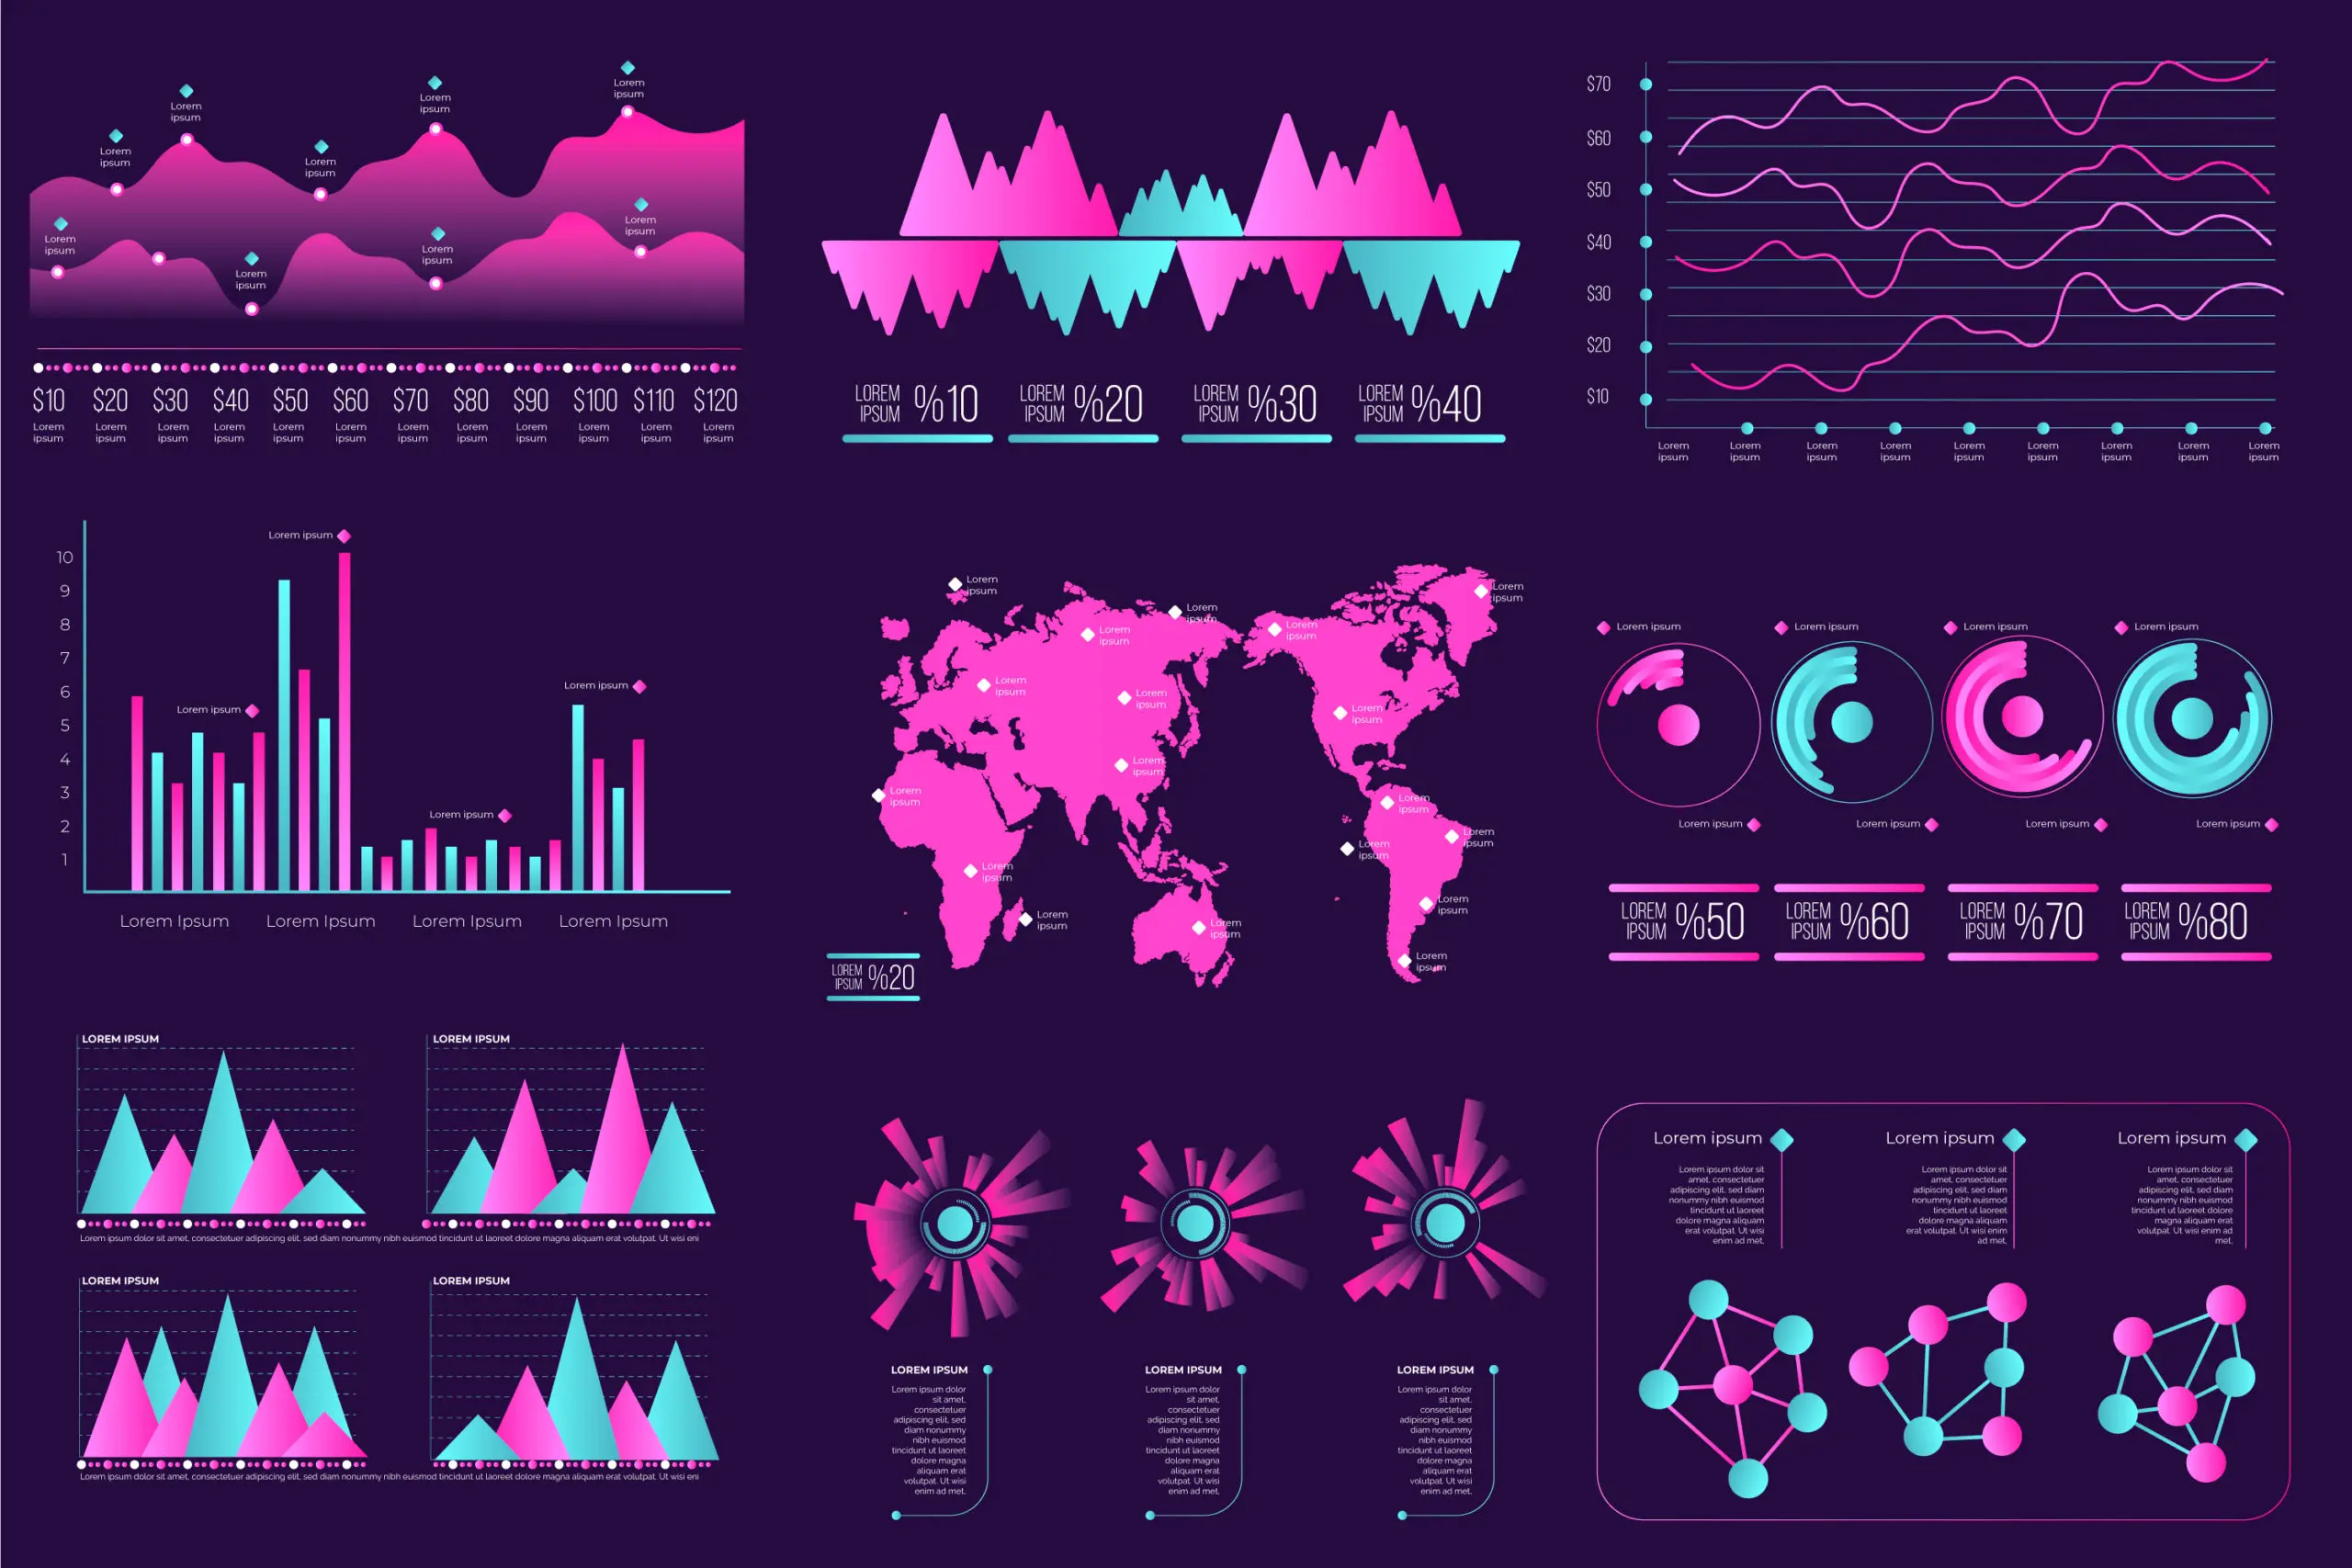 Types of data visualization